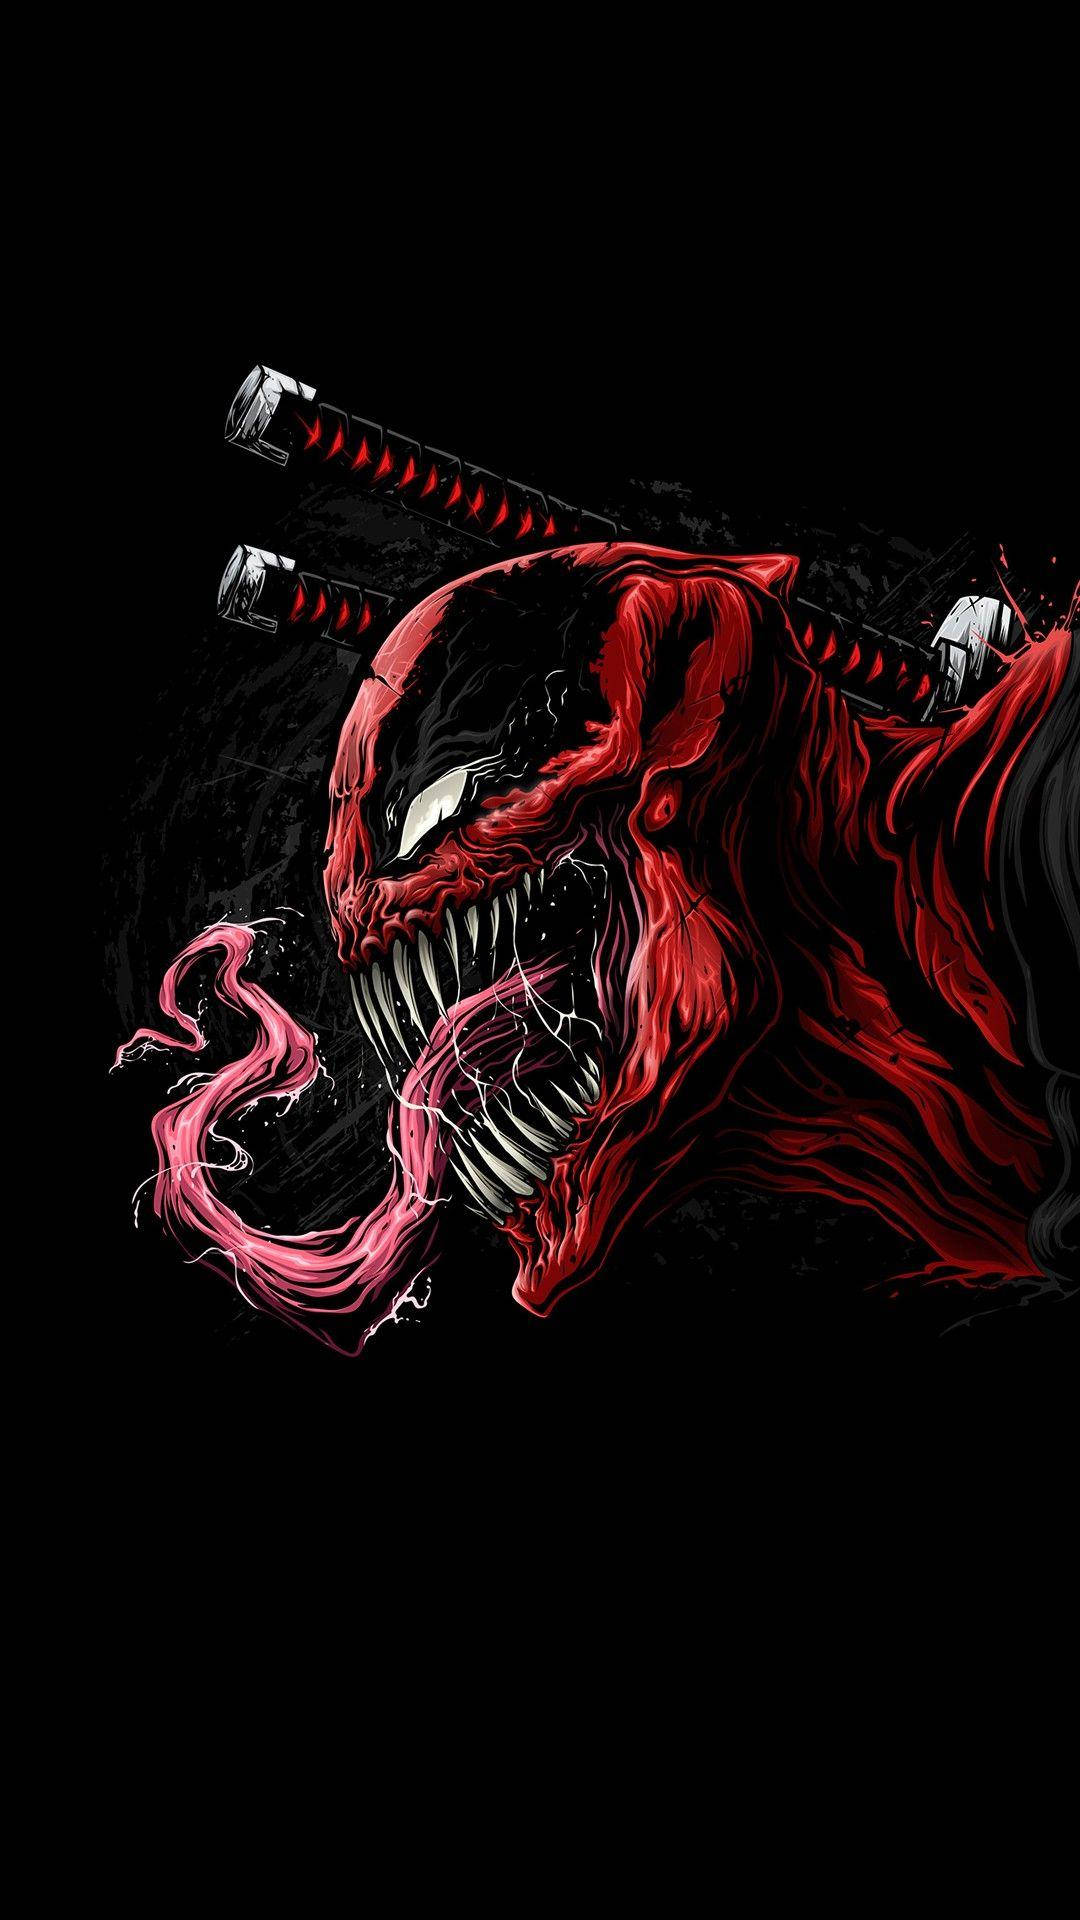 Venom wallpaper by rustyrobottech - Download on ZEDGE™ | 9c05